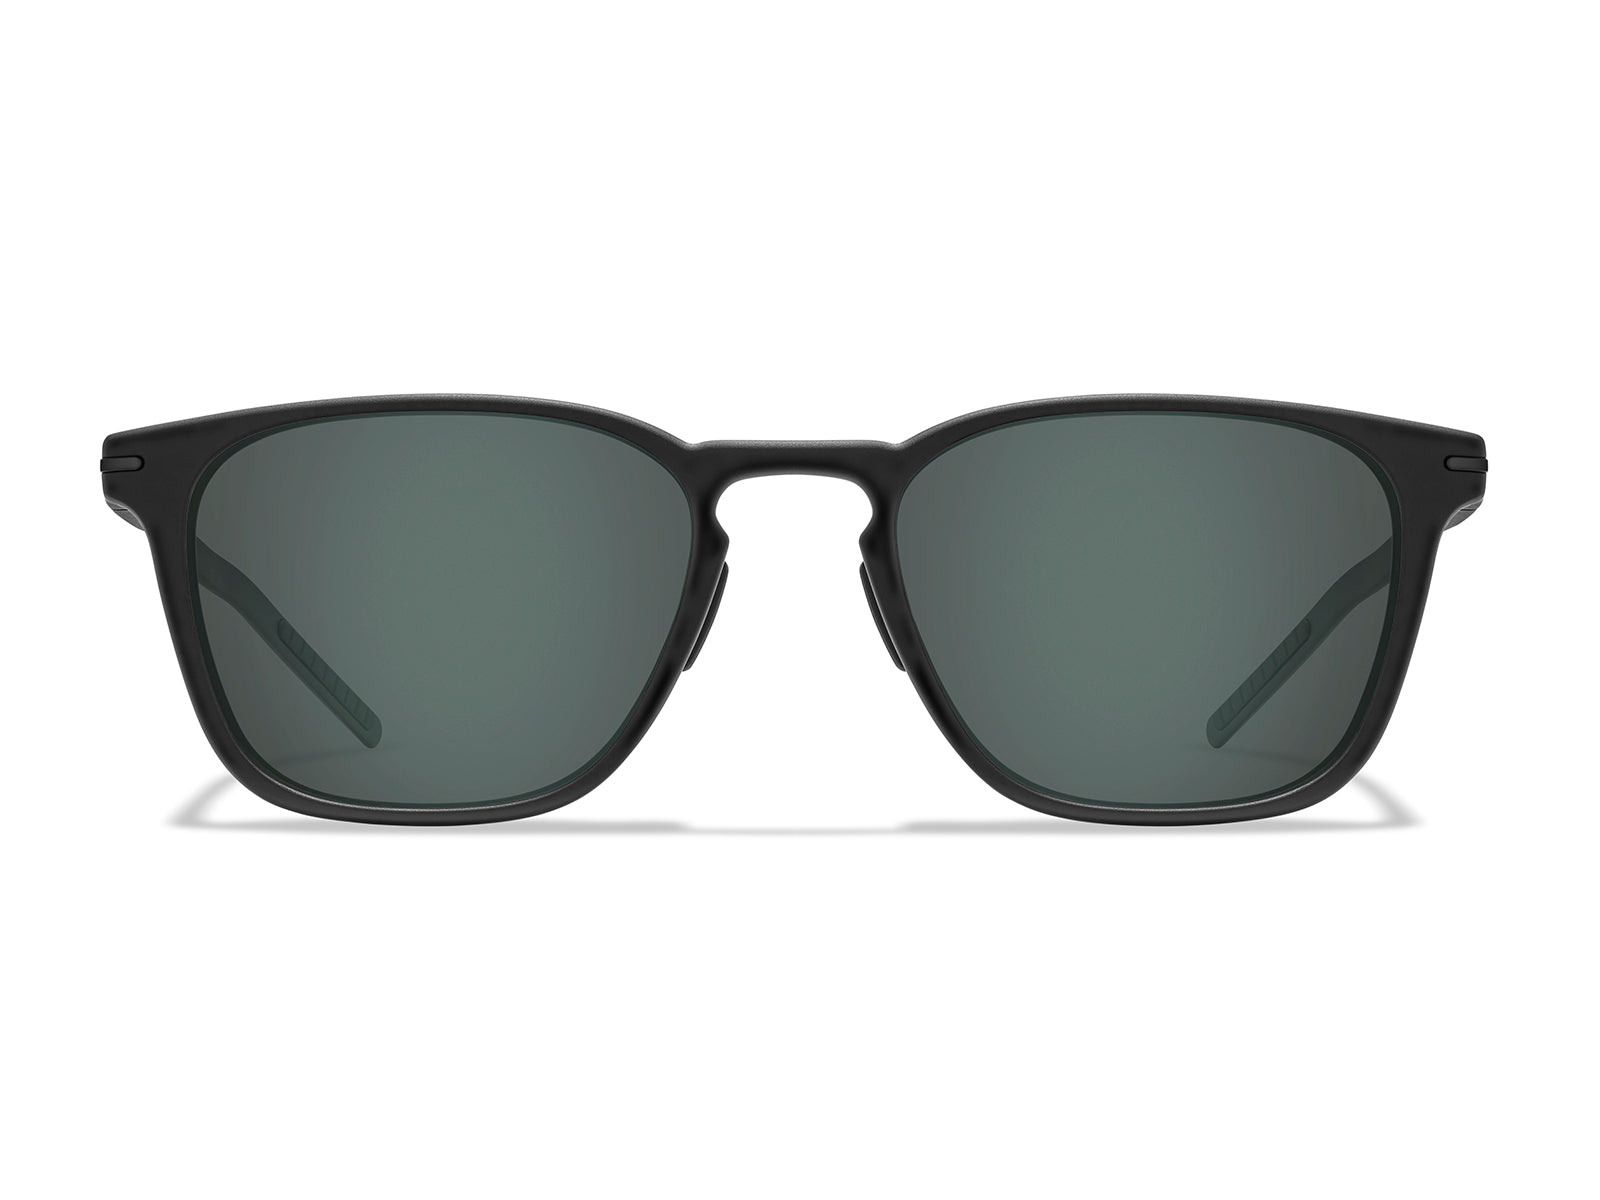 Roka Rory 2.0 Sunglasses with Matte Black Frames - Dark Carbon (Polarized) Lens | Regular